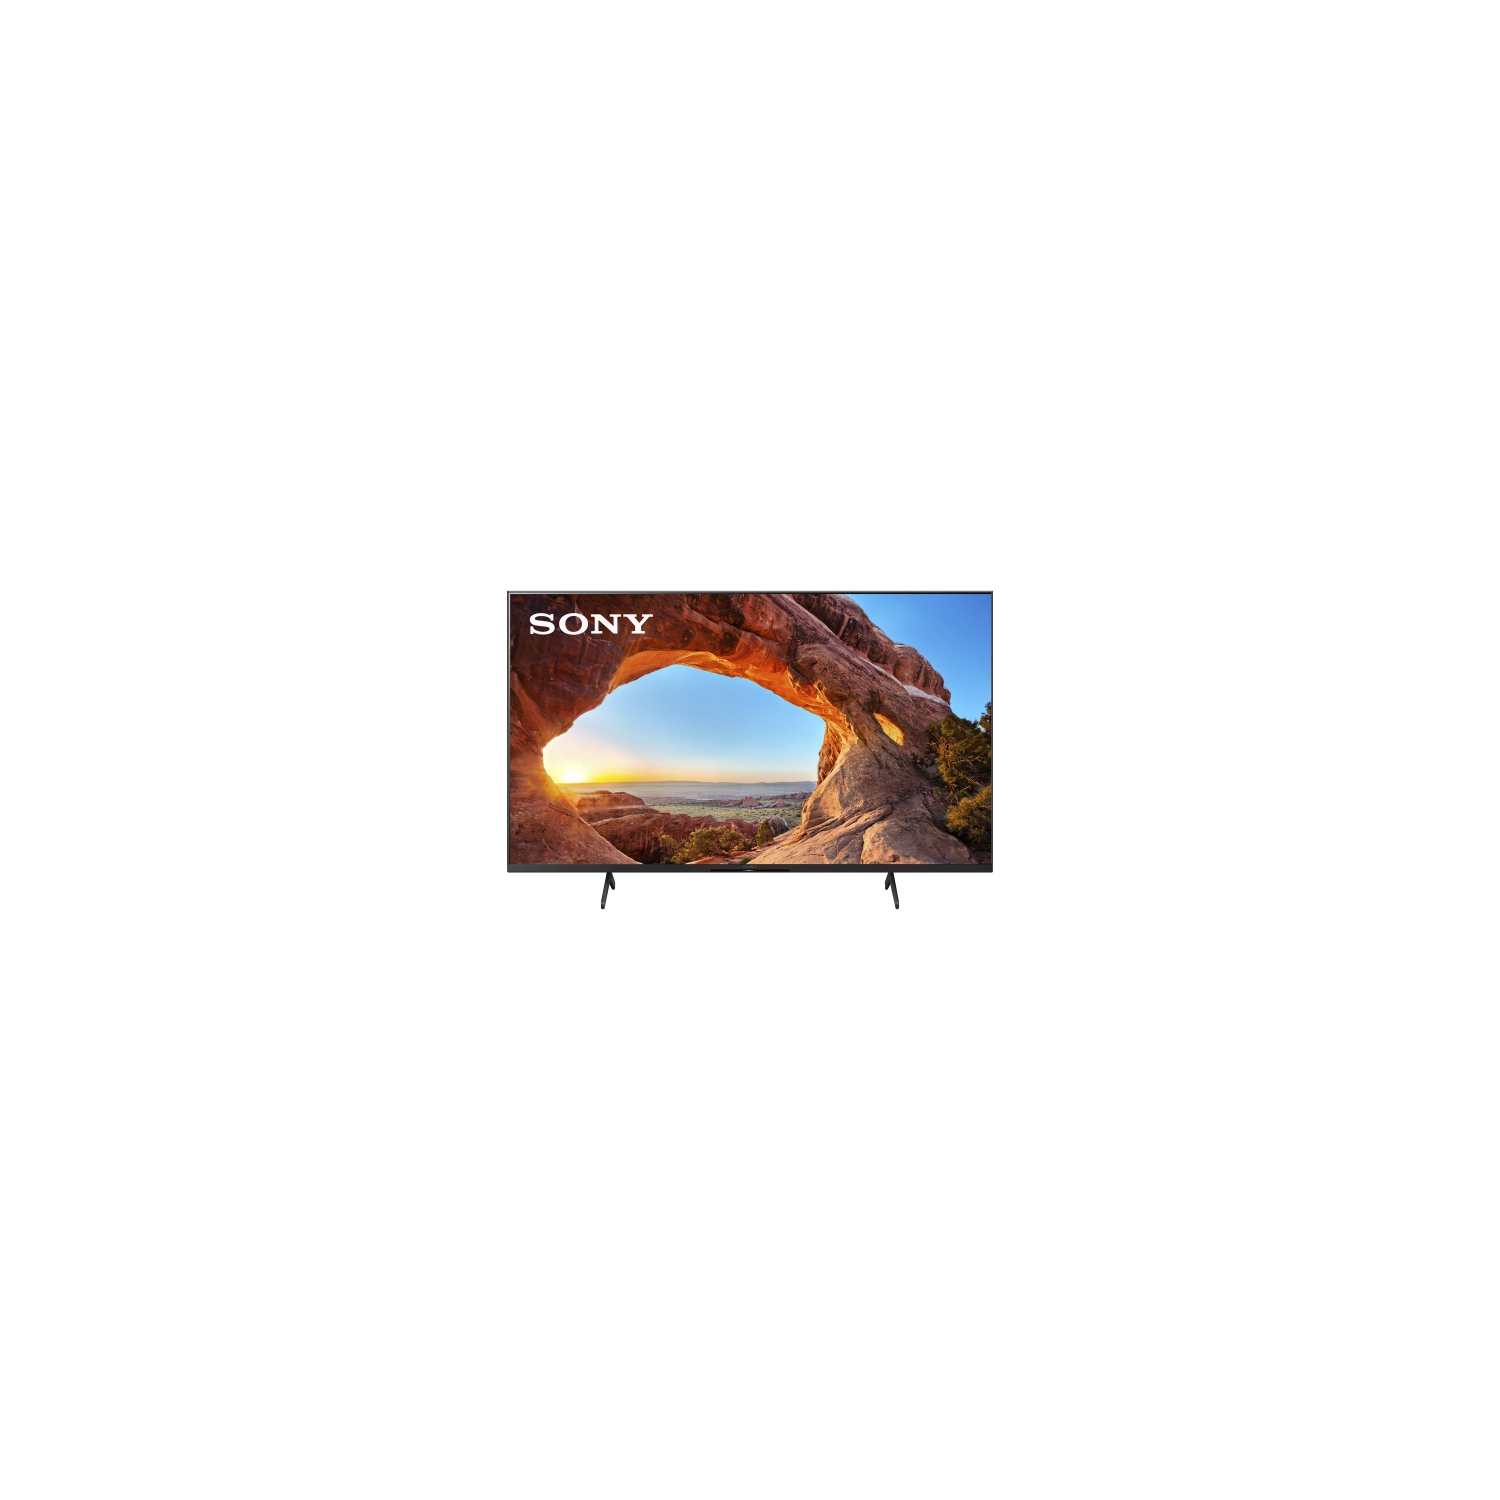 Sony X85J 43" 4K UHD HDR LED Smart Google TV (KD43X85J) - 2021 - Open Box